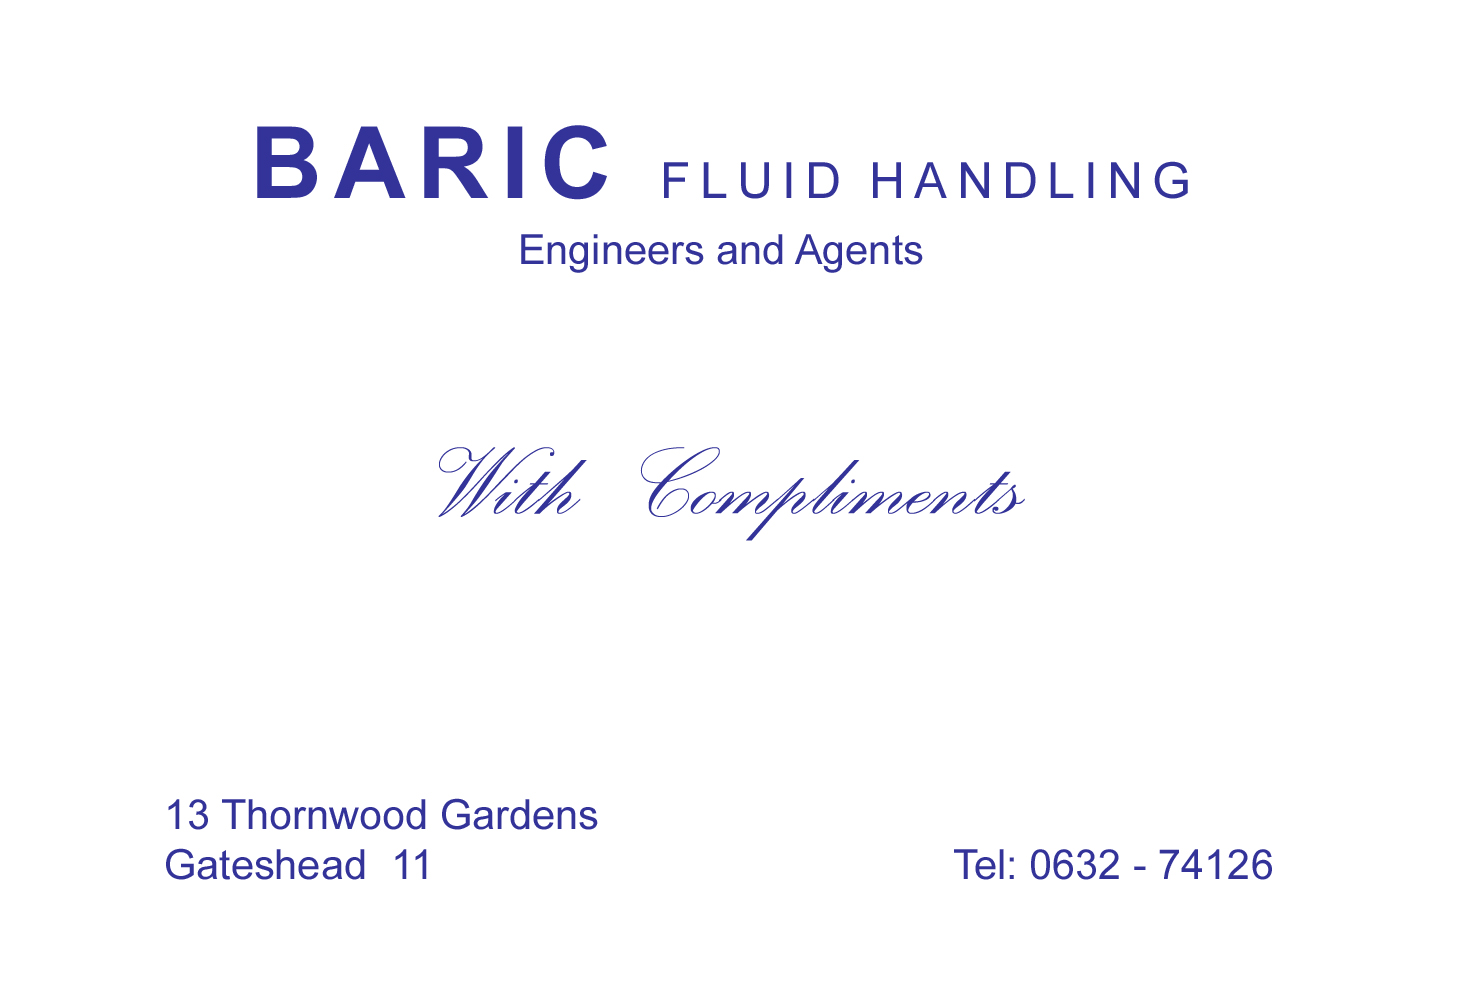 baric fluid handling - 1970